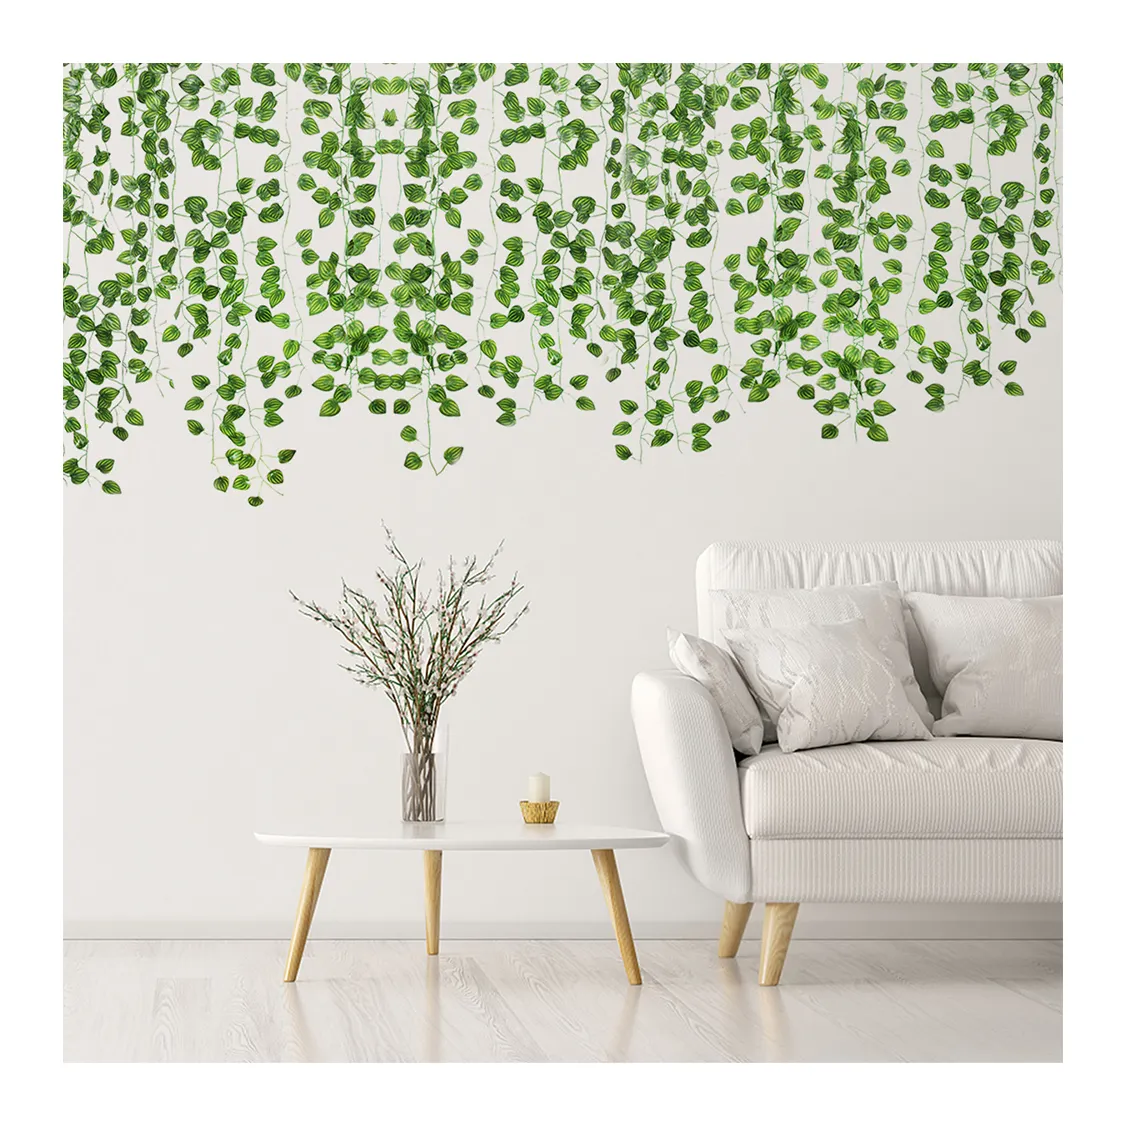 CTT-3-11 12pcs DIY grüne Pflanze Bildschirm Efeu Privatsphäre hängen Kunststoff grün Blätter Faux Reben für Outdoor-Garten-Dekor